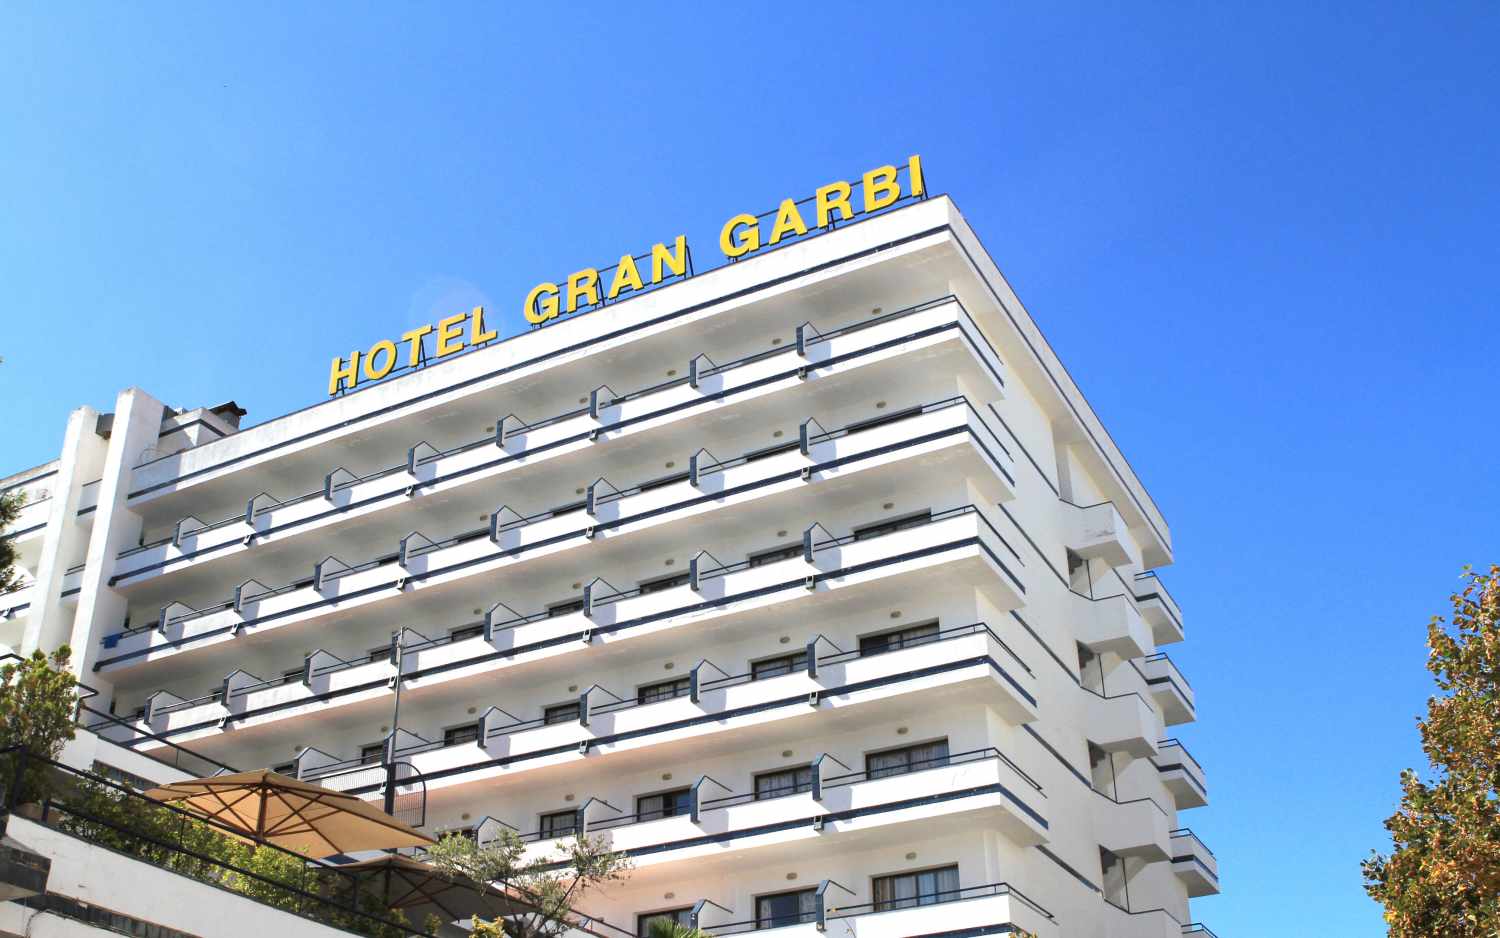 Hotel Gran Garbí, Lloret de Mar, Costa Brava, Spanje